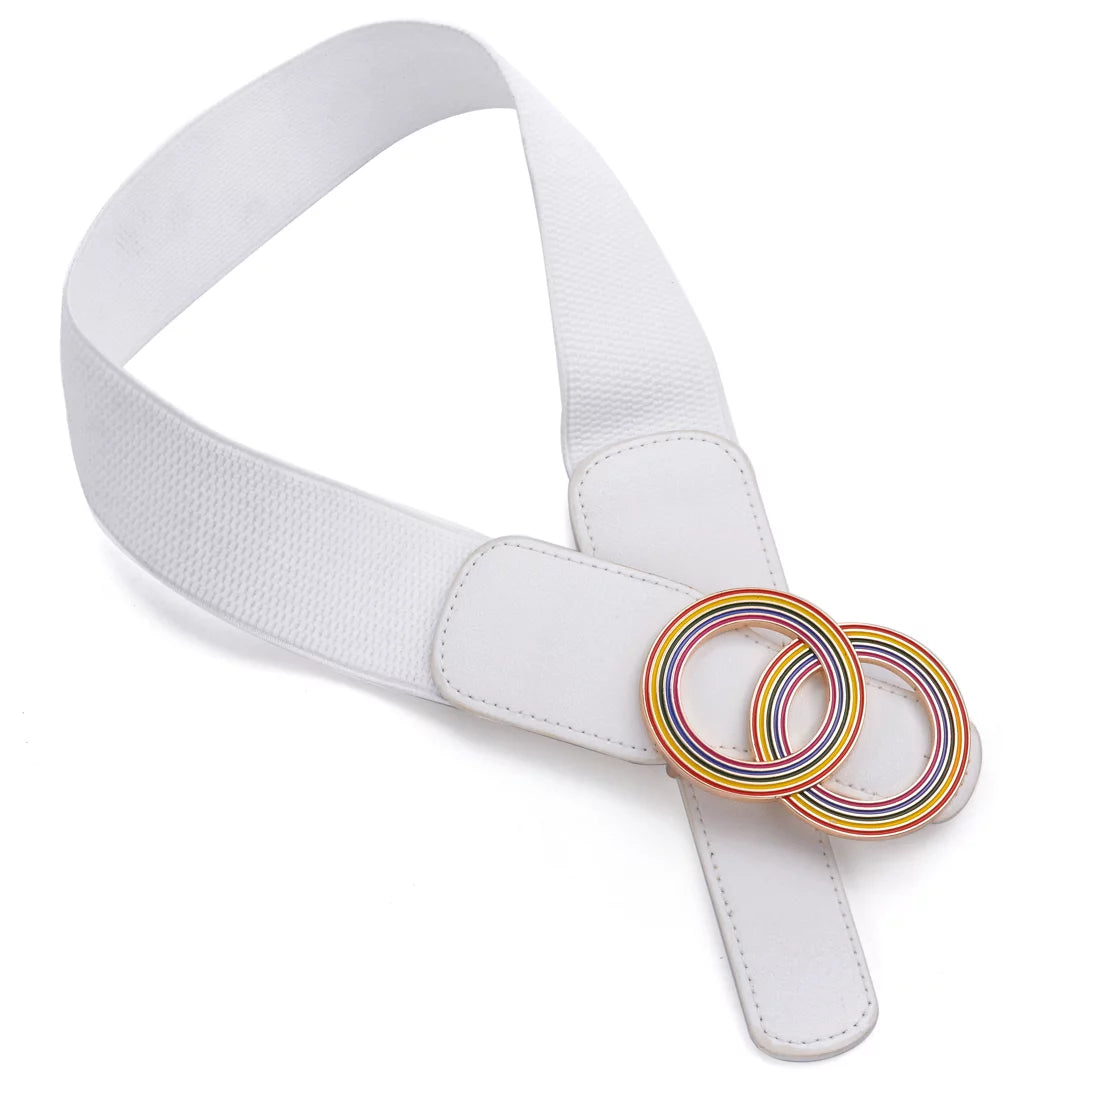 Beltox Women’S Elastic Waist Belt W Double Rainbow Ring White 37-47"